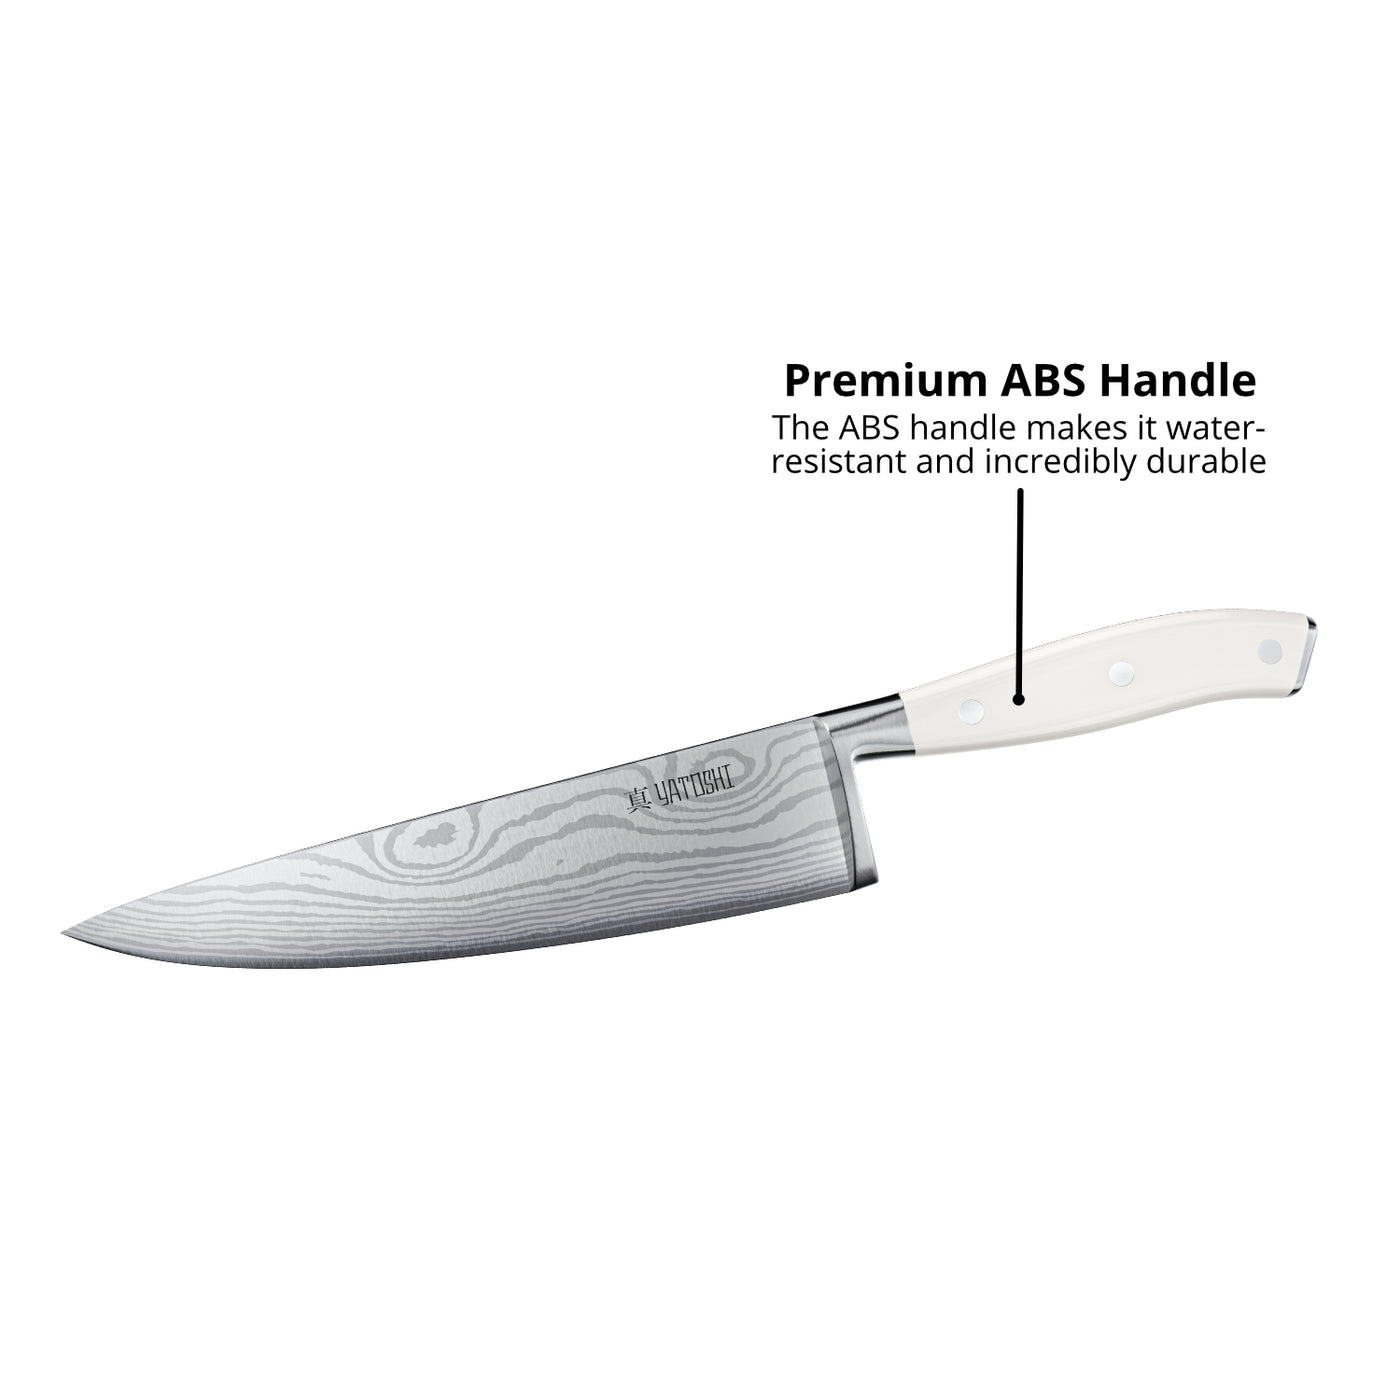 Yatoshi Knives Yatoshi Knife Block Set - Pro Kitchen Knife Set Ultra Sharp  High Carbon Stainless Steel & Reviews